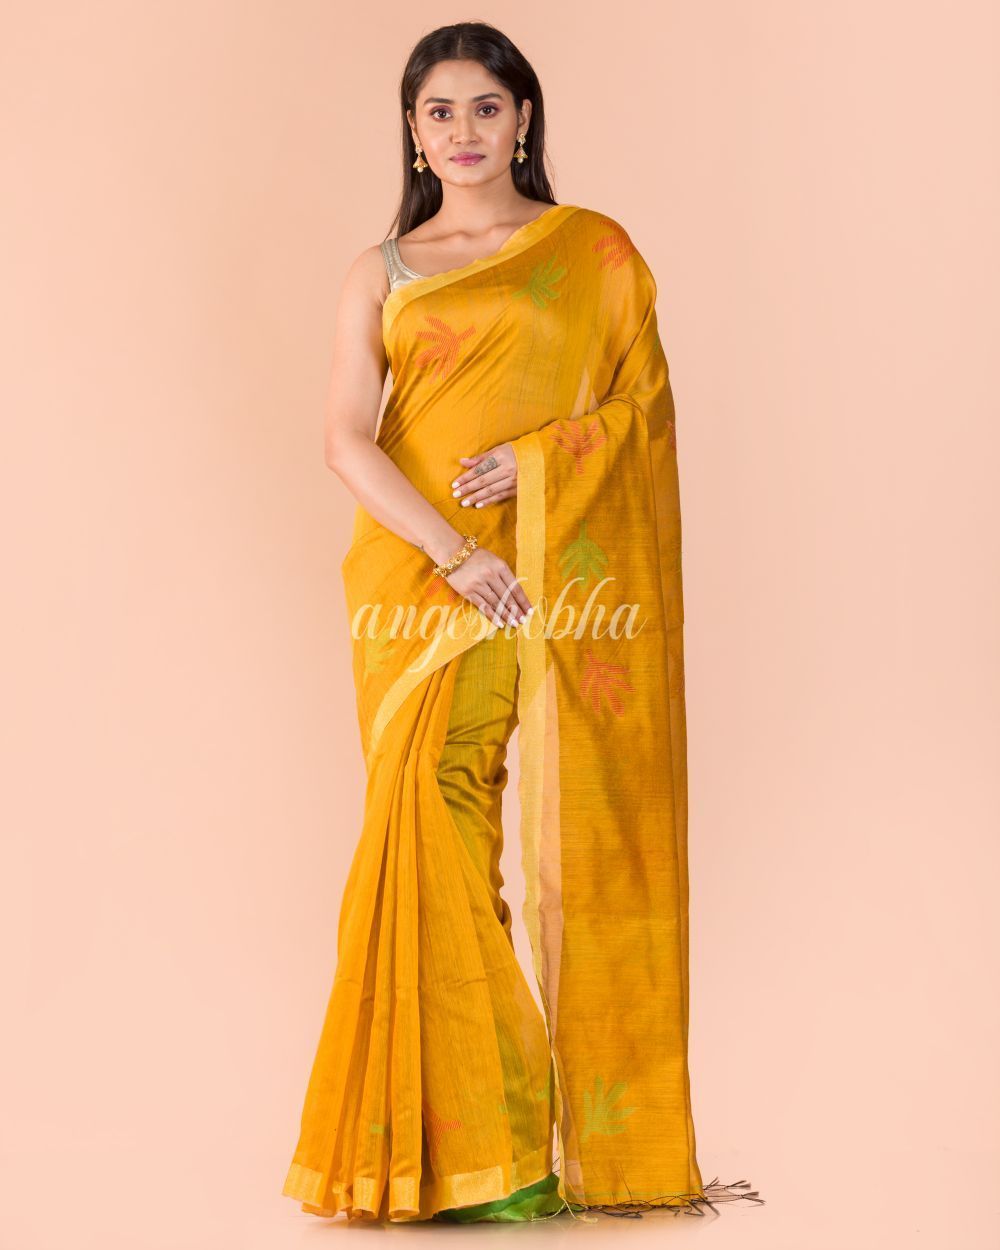 Women's Yellow Blended Cotton Jamdani Saree - Angoshobha